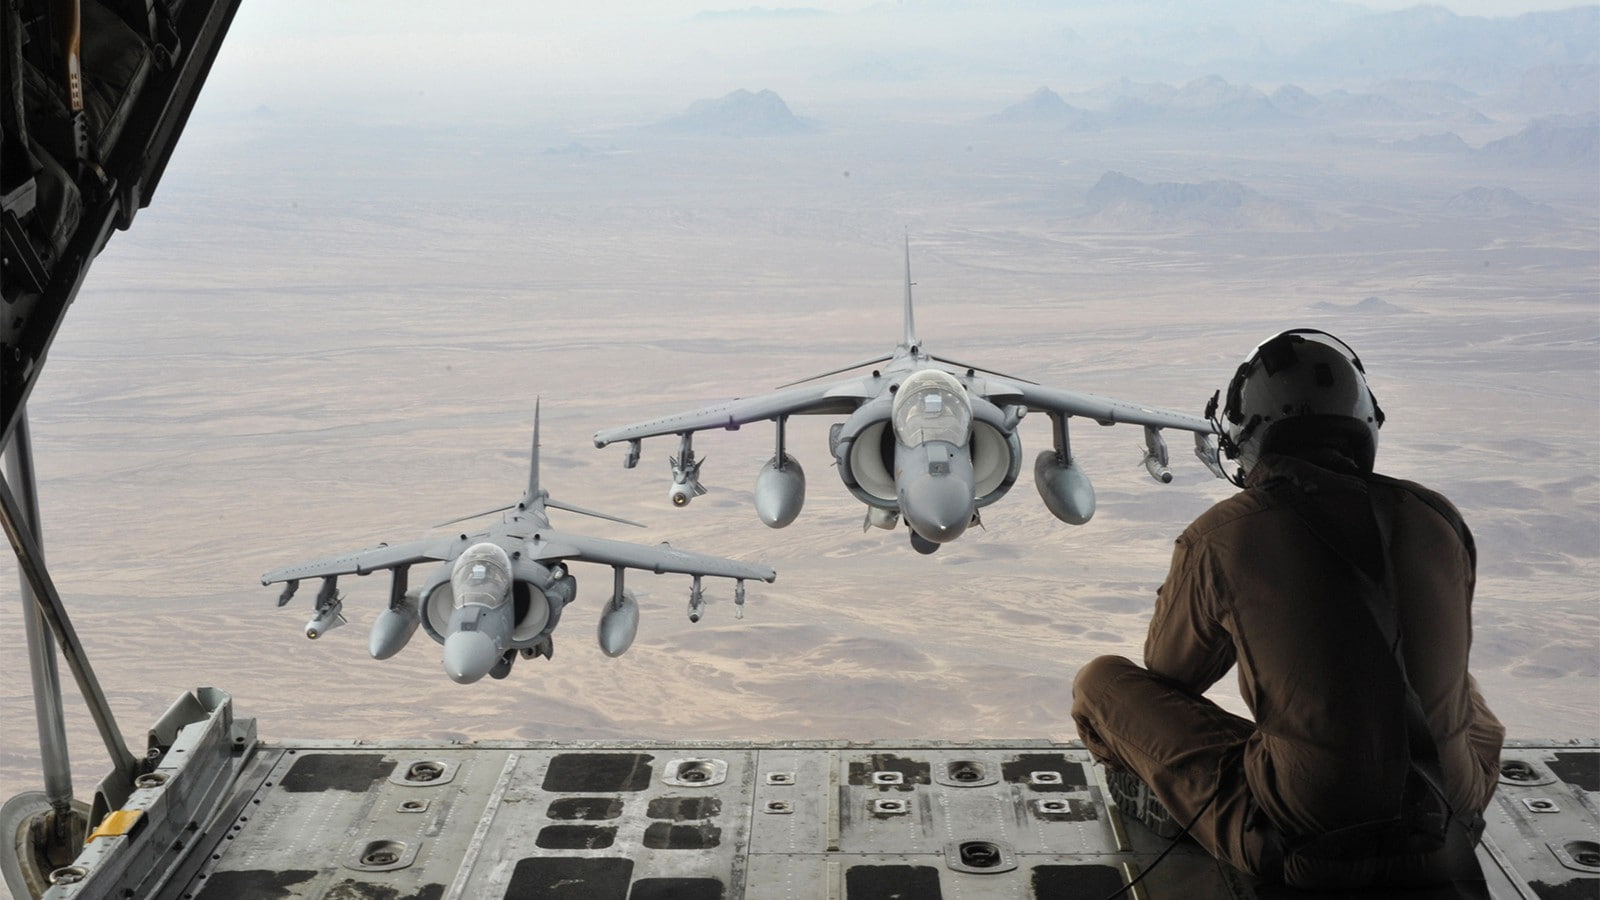 Harrier, transportation, military, mode of transportation, air vehicle